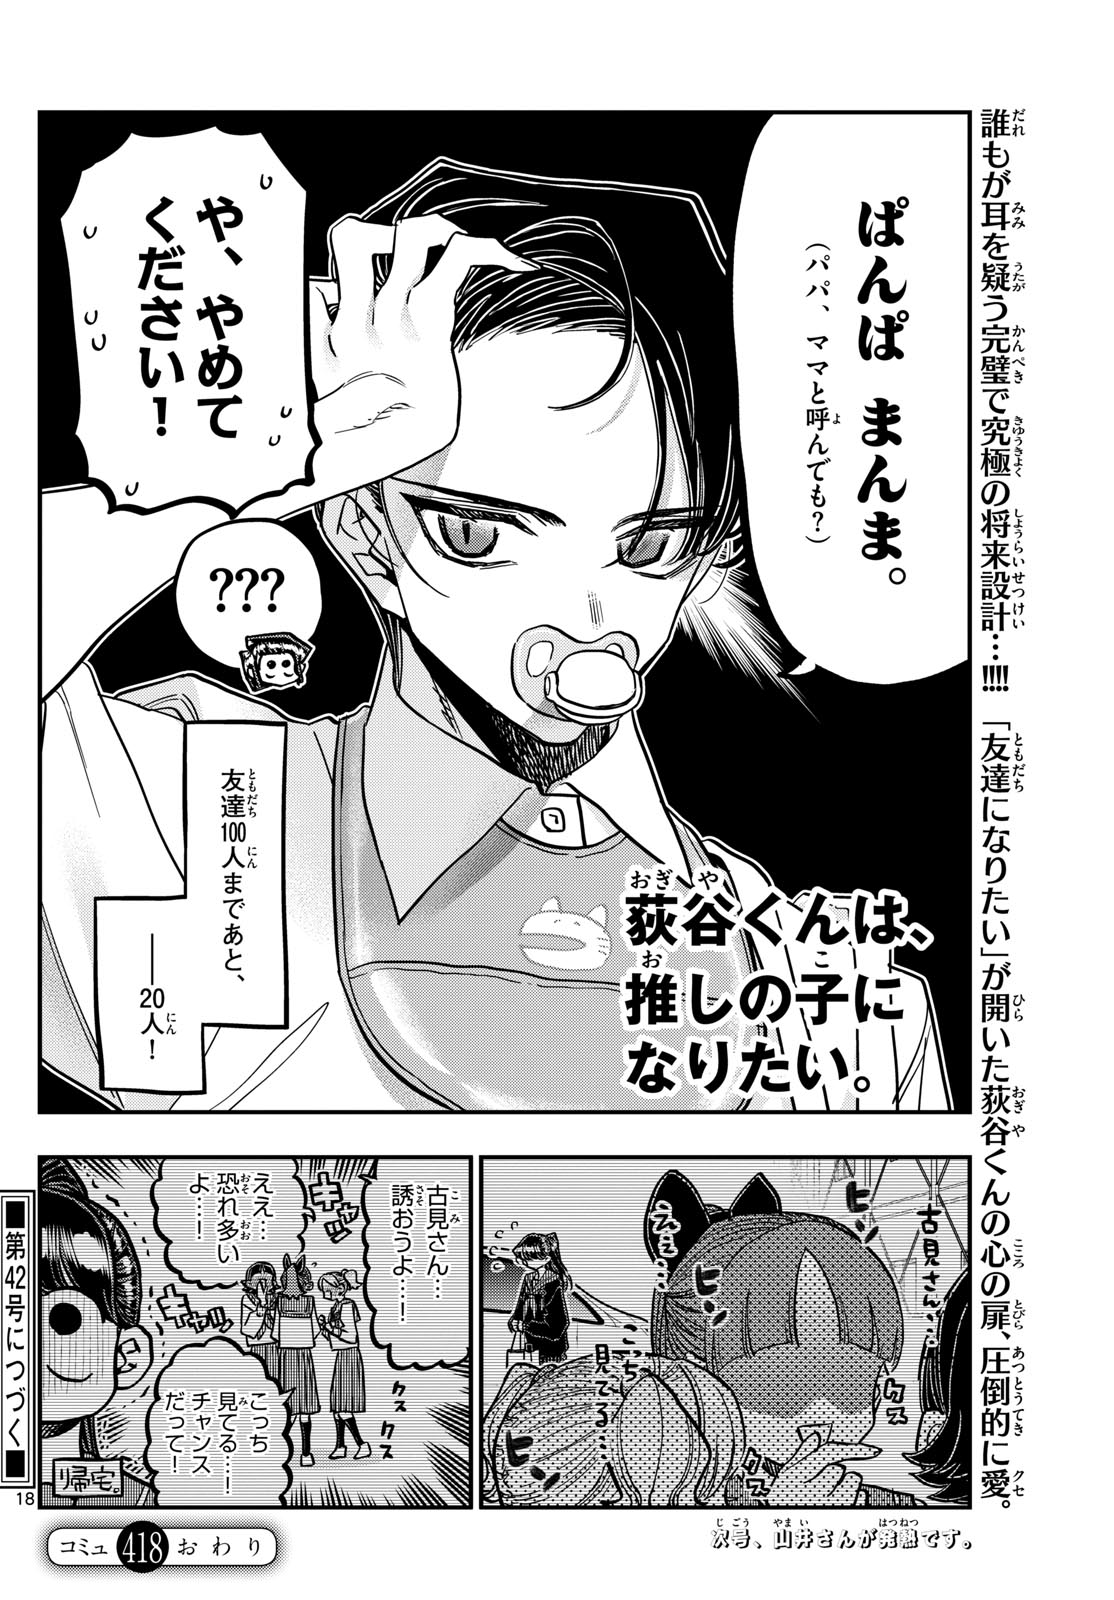 El bebe de Shouko y Tadano ! Una familia de 4 ??? Komi-san Manga 418 